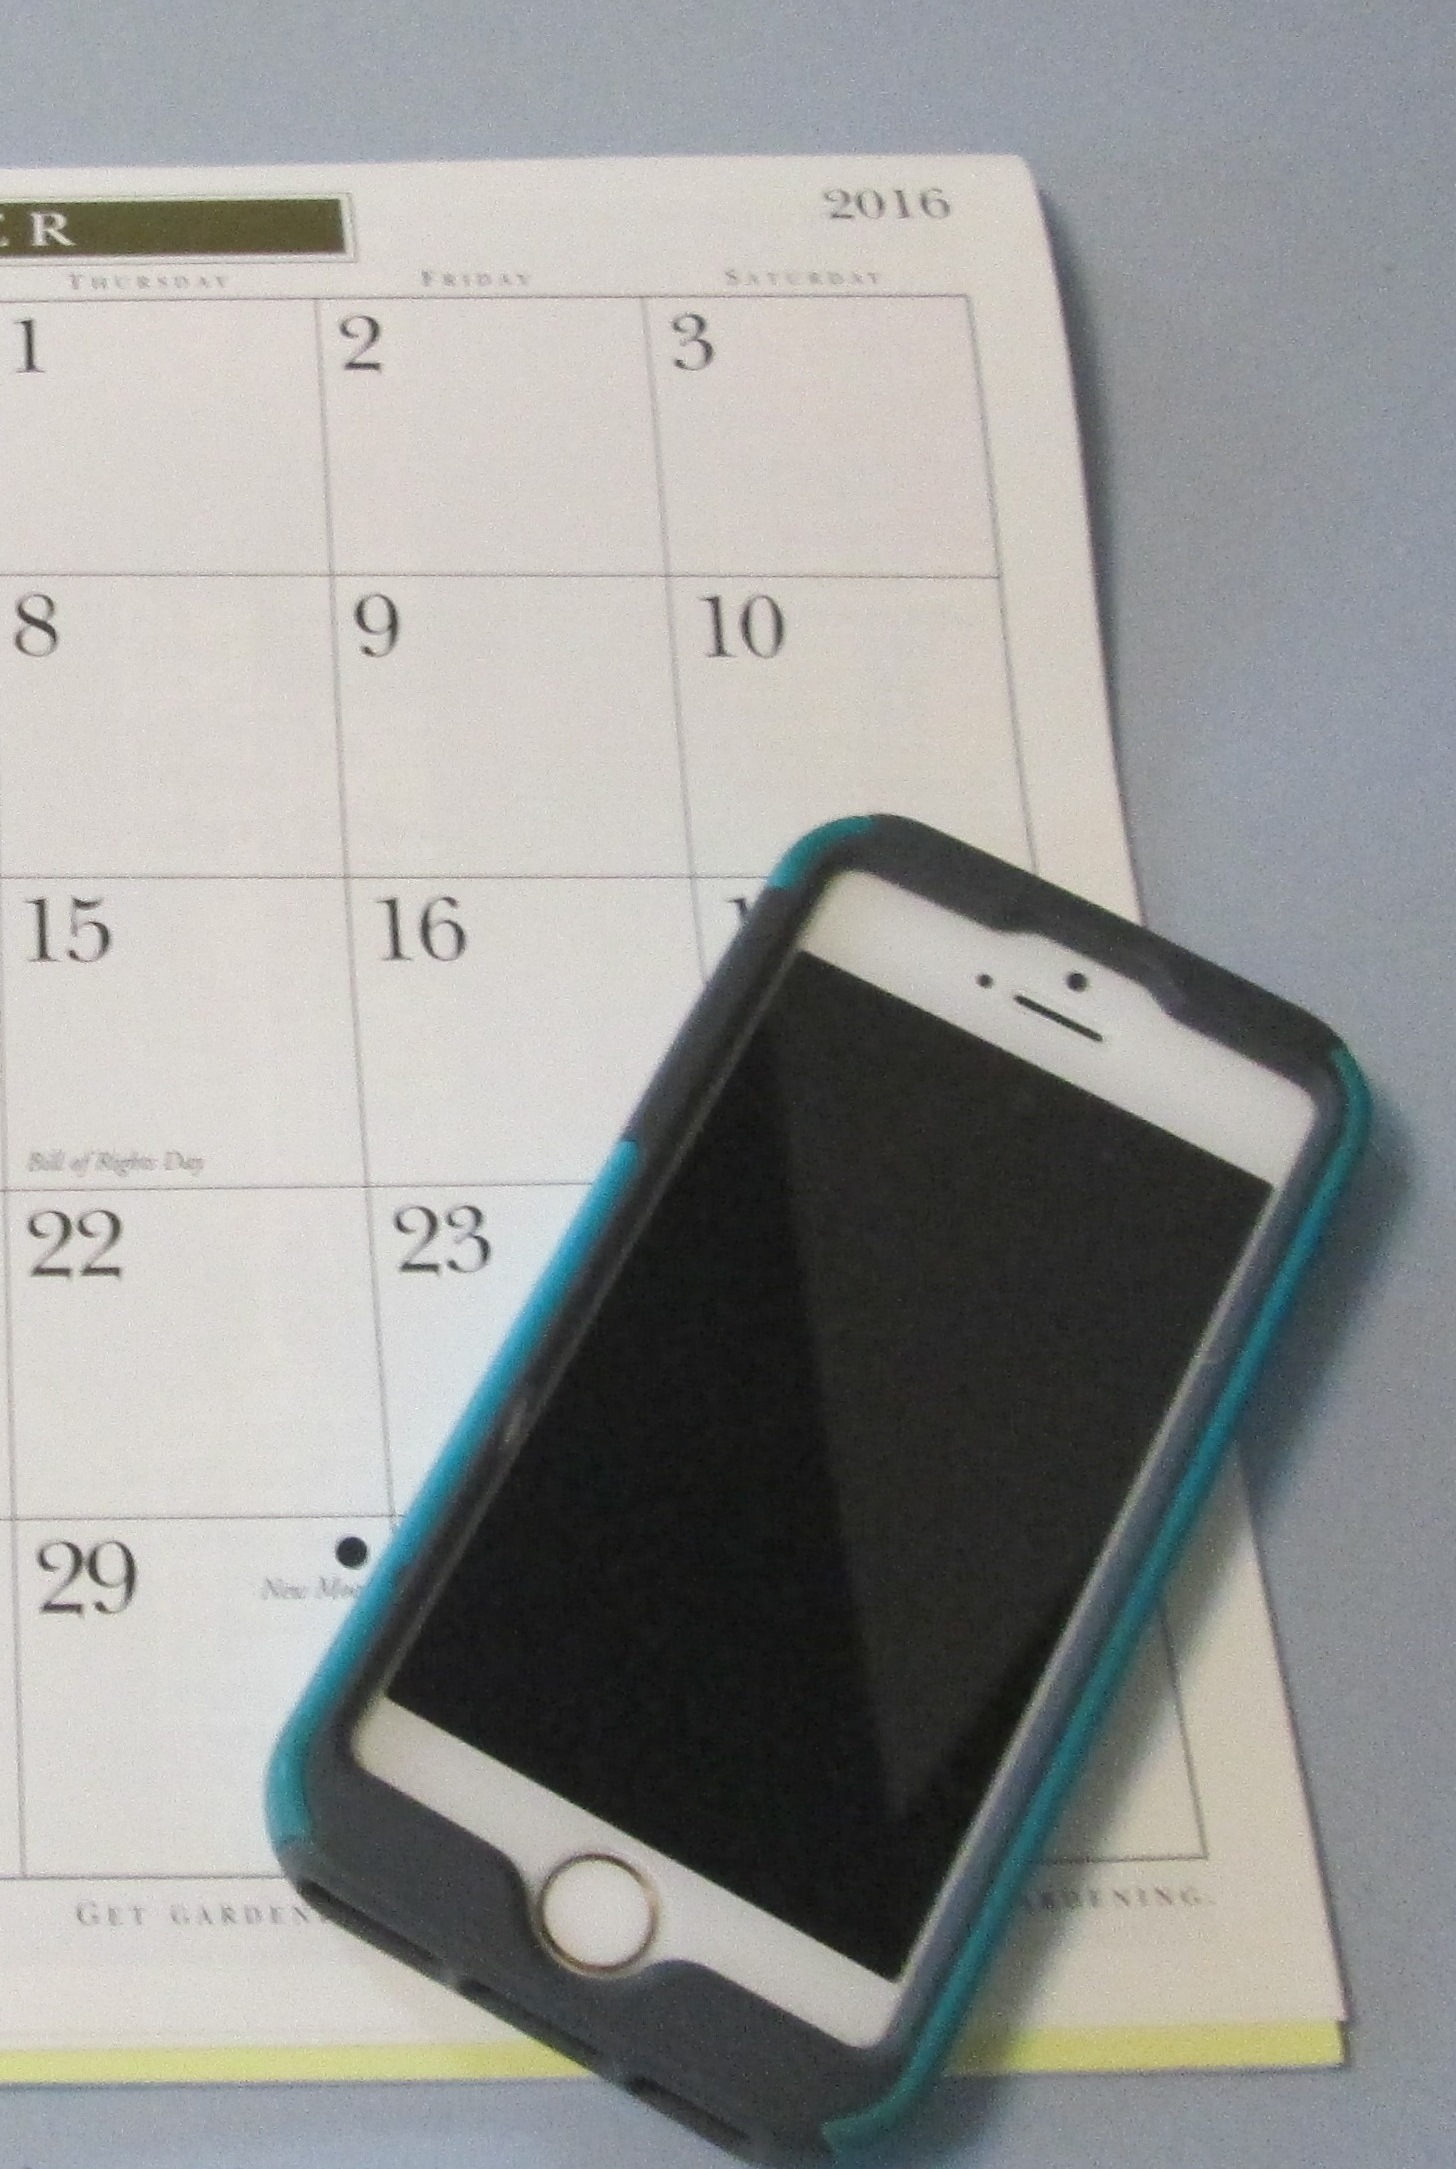 iPhone with calendar